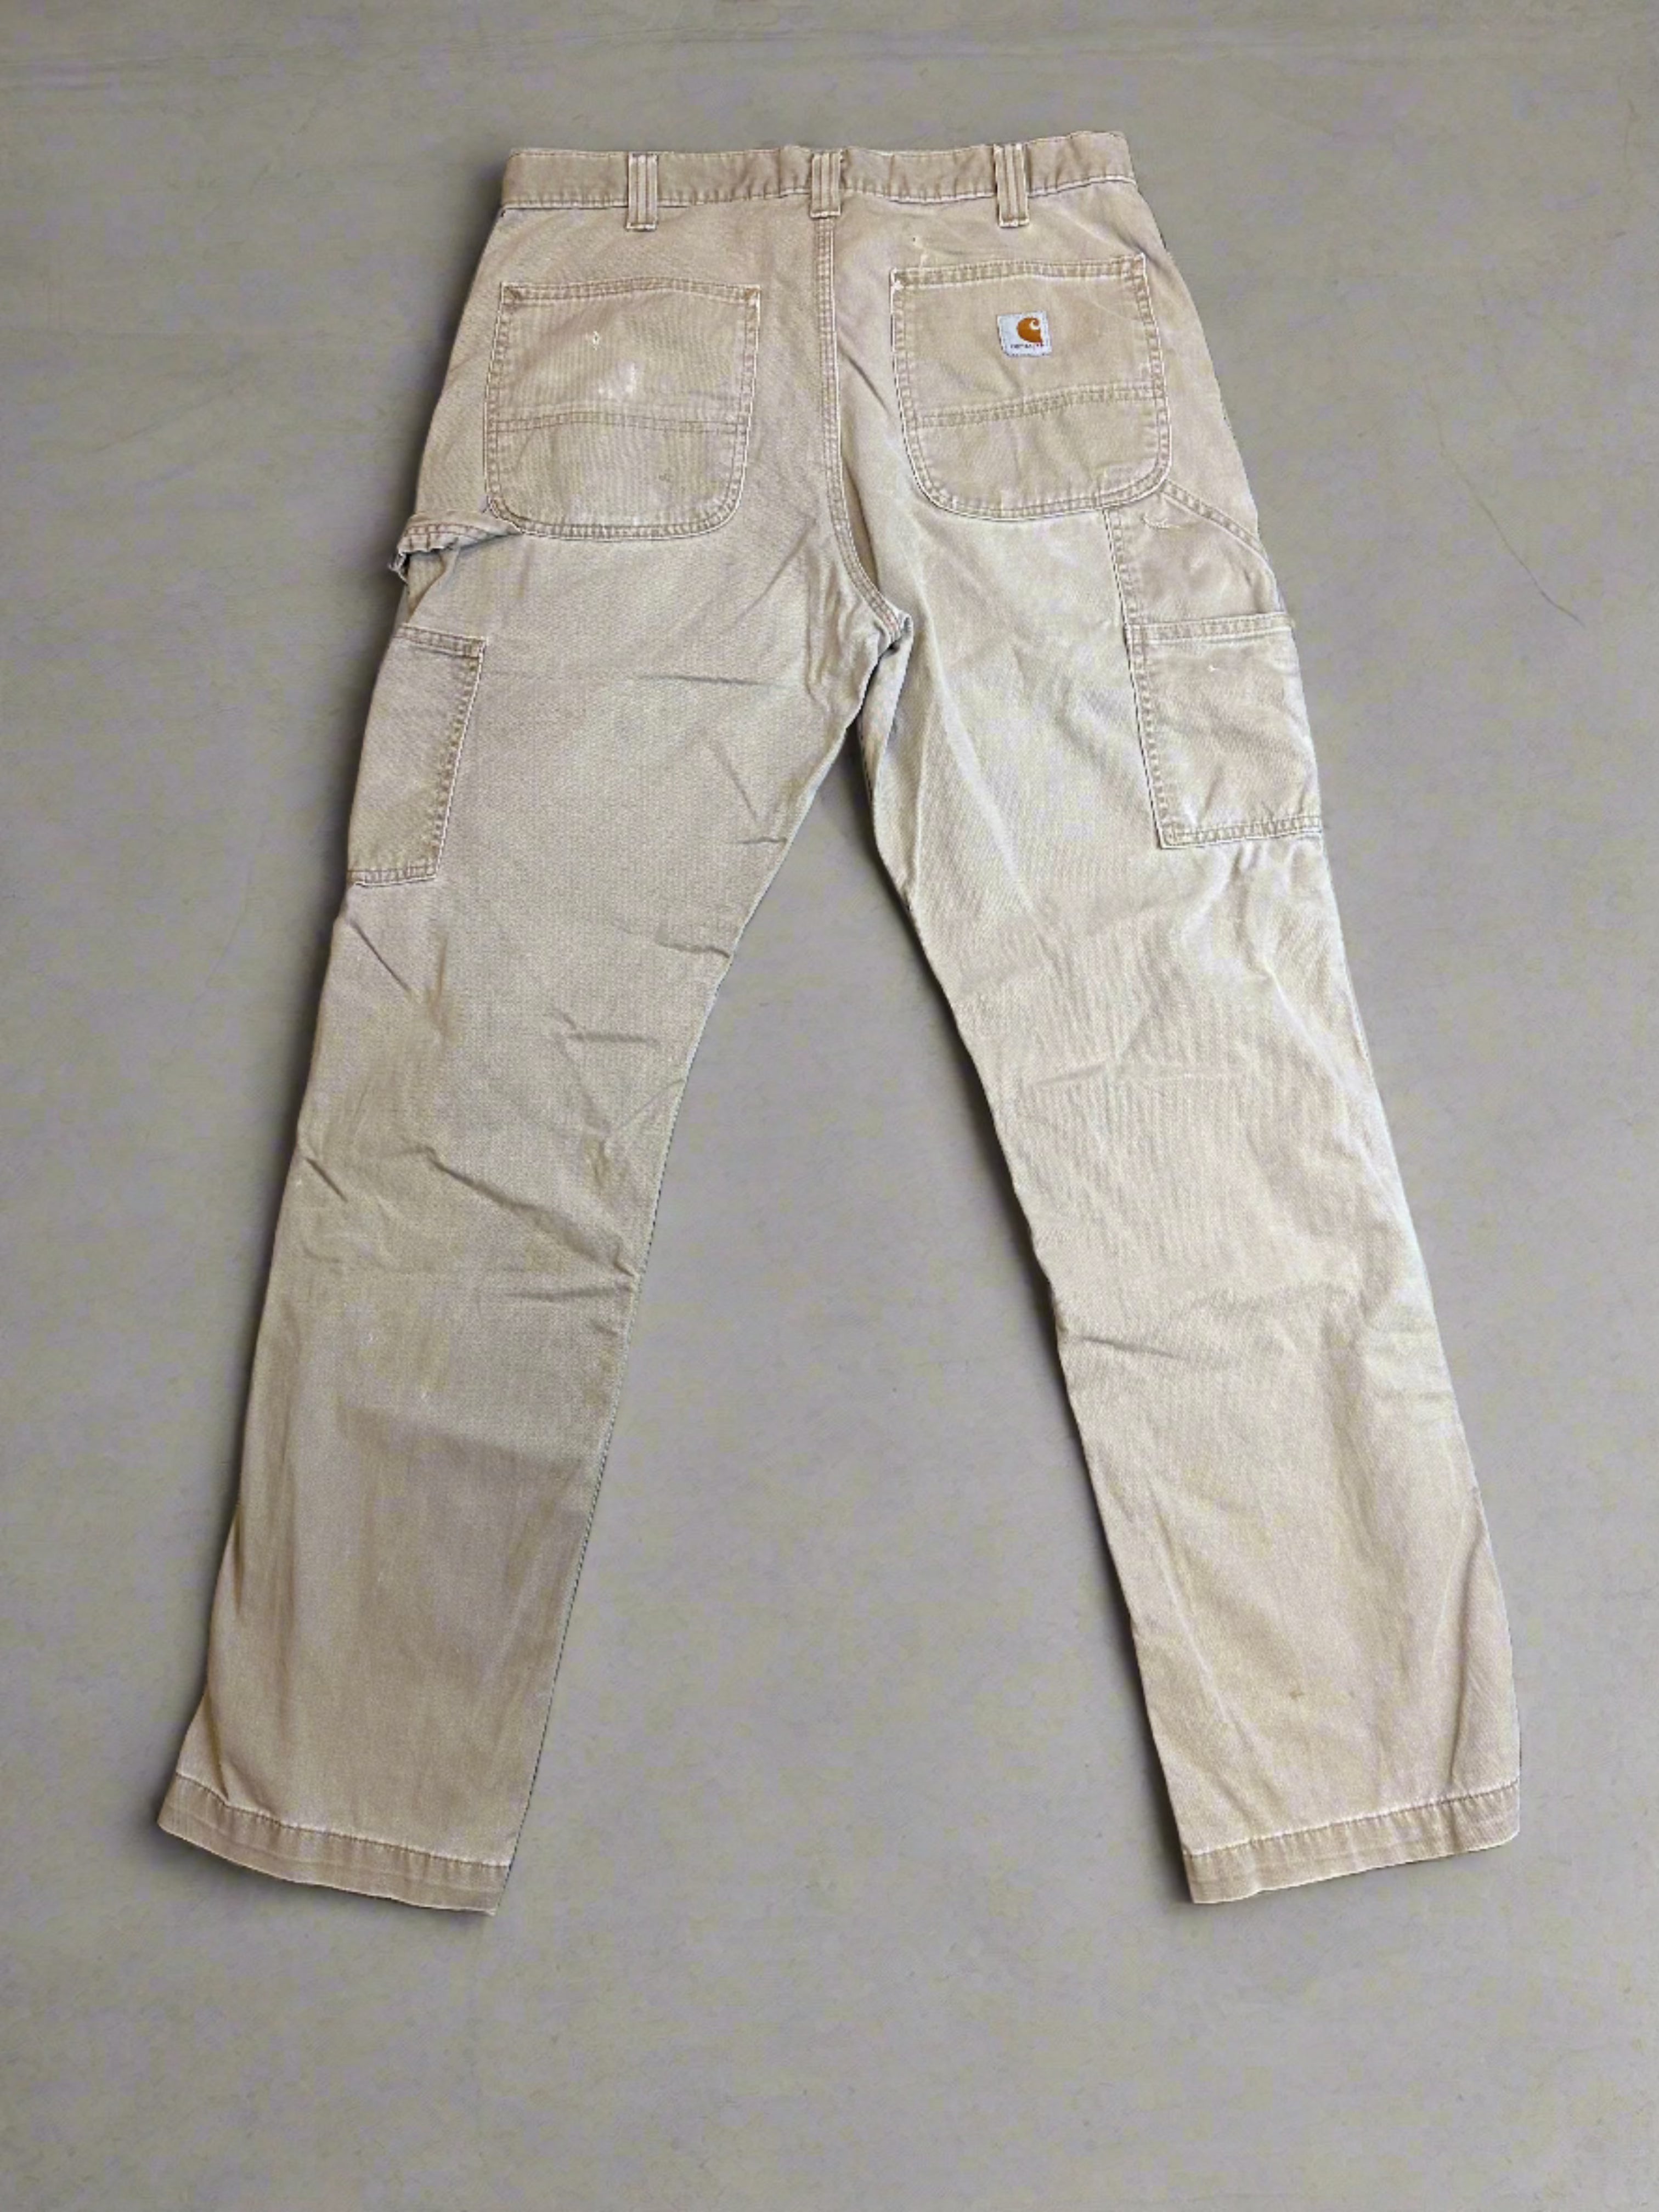 Vintage Carhartt Distressed Pants - size 33x32